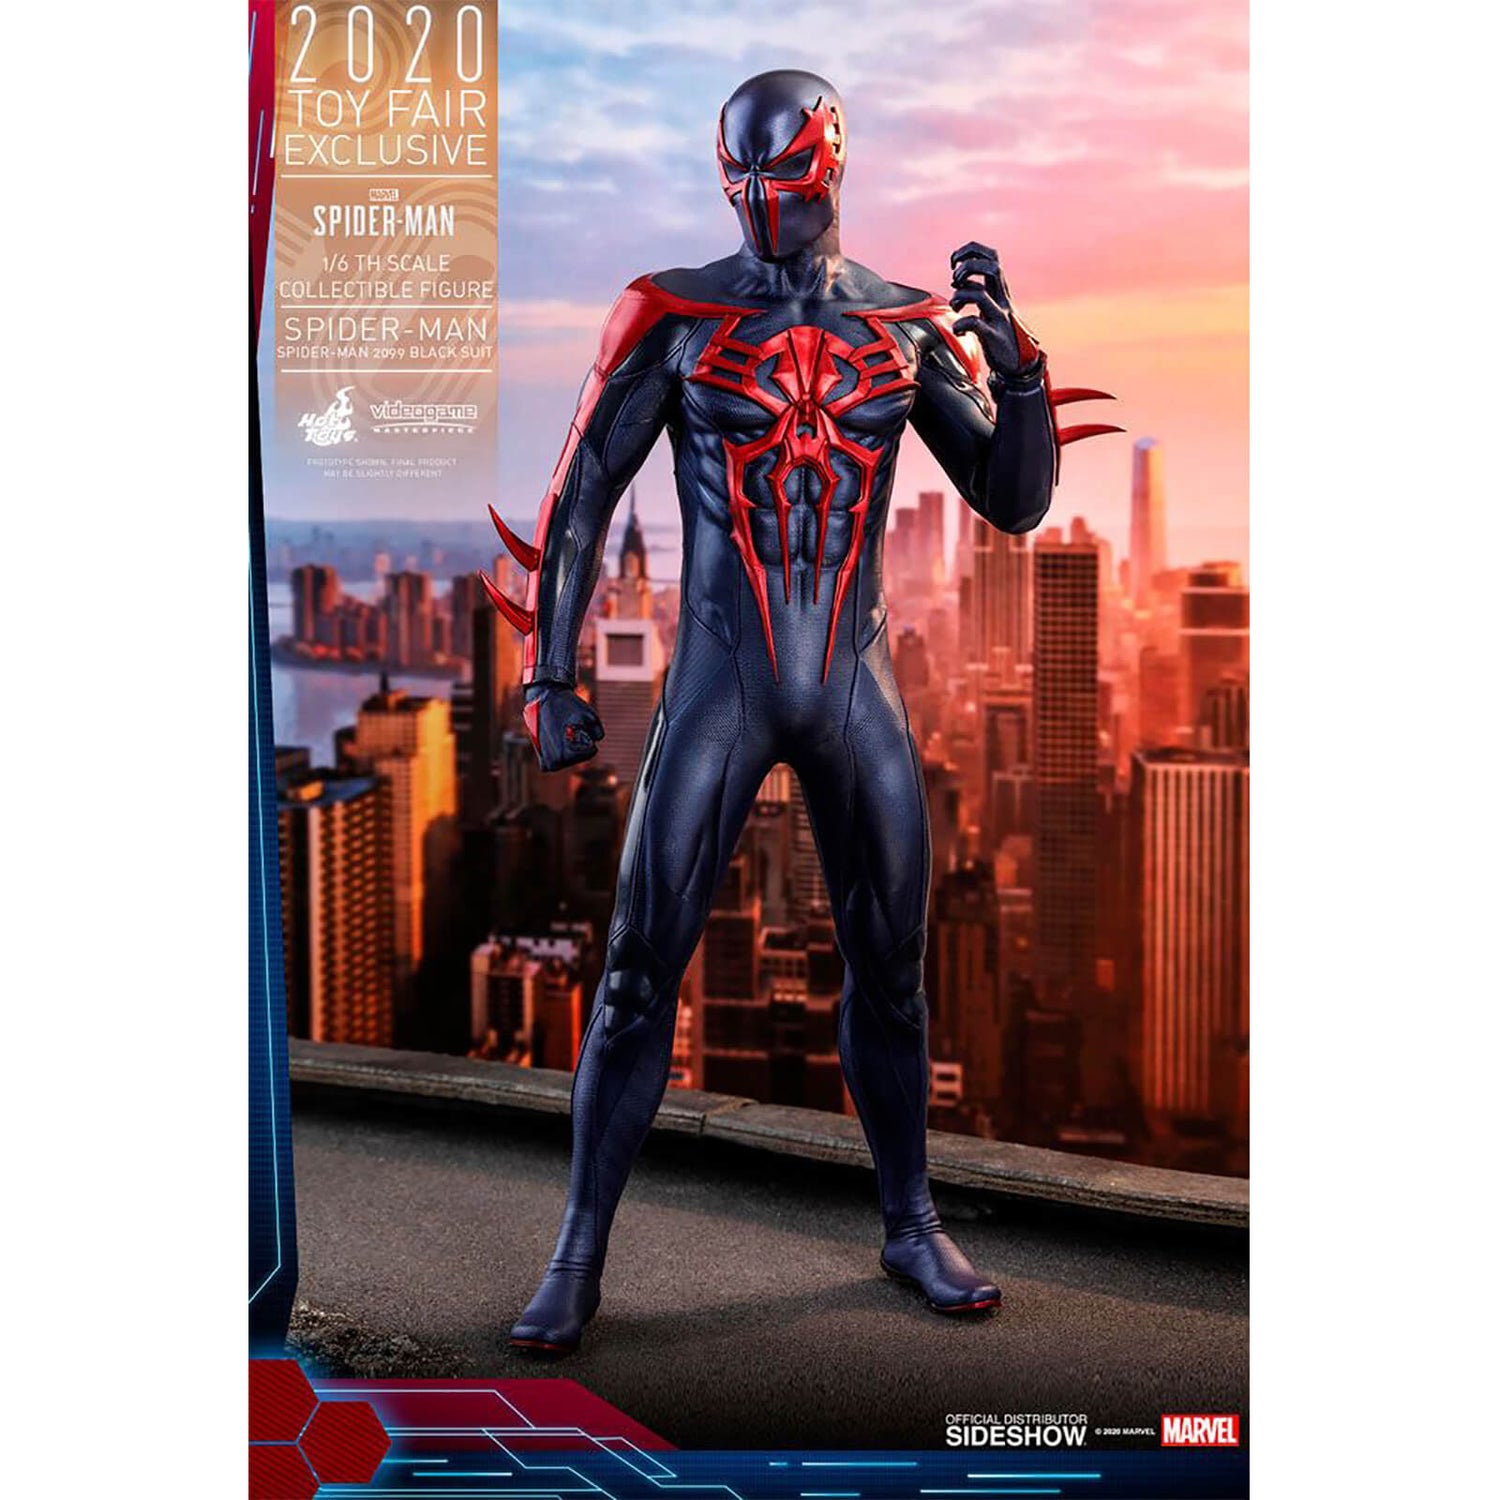 Hot Toys Spider-Man (Spider-Man 2099 Black Suit) Toy Fair Exclusive Action  Figure Merchandise | Zavvi Australia